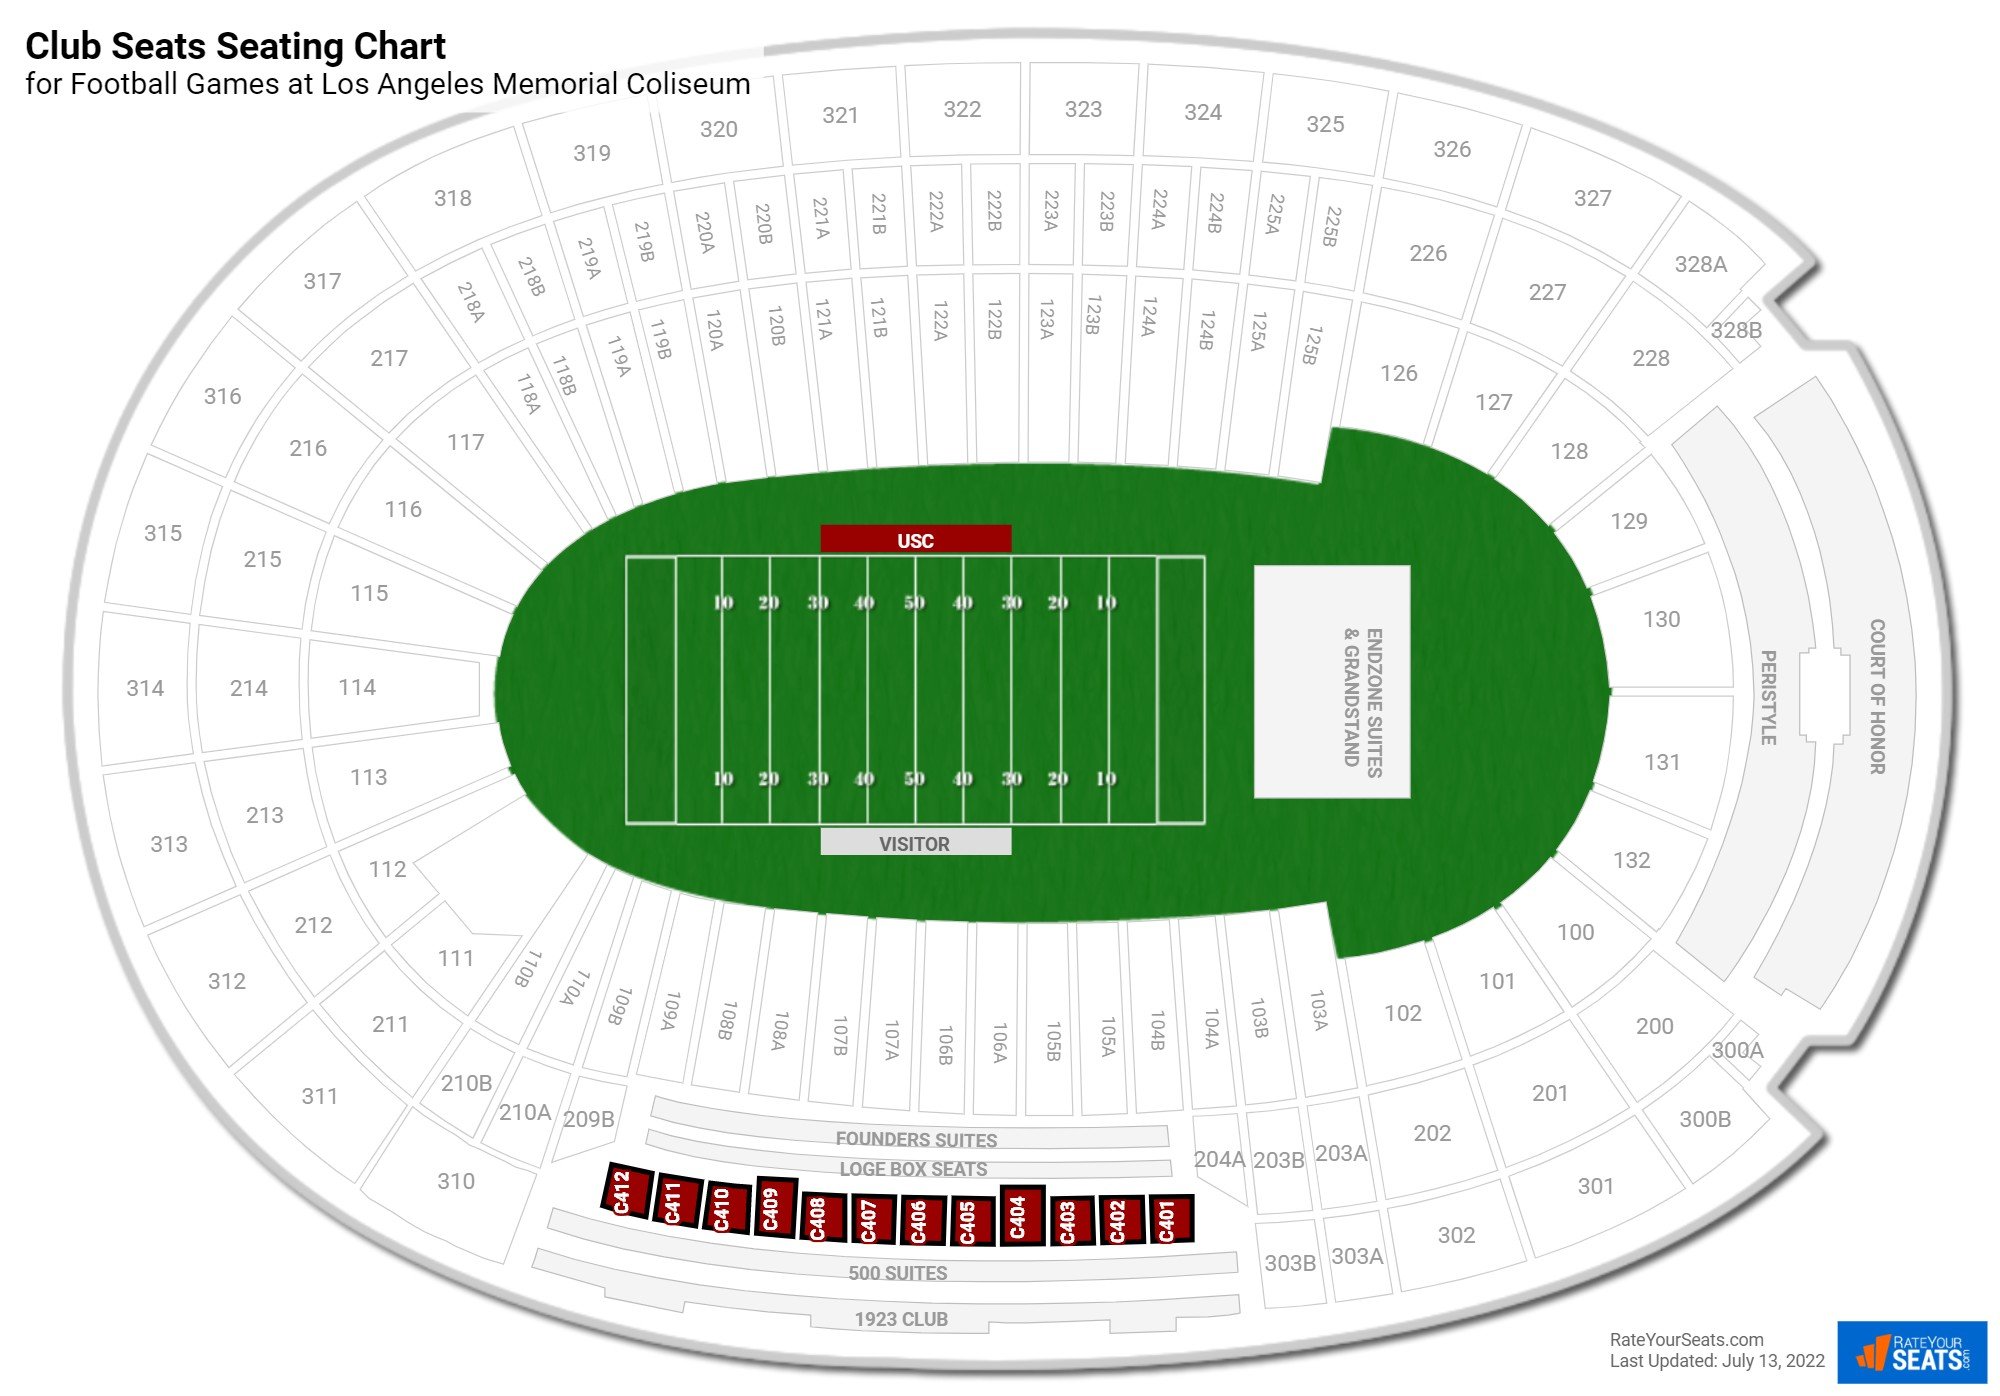 Football Club Seats Seating Chart at Los Angeles Memorial Coliseum